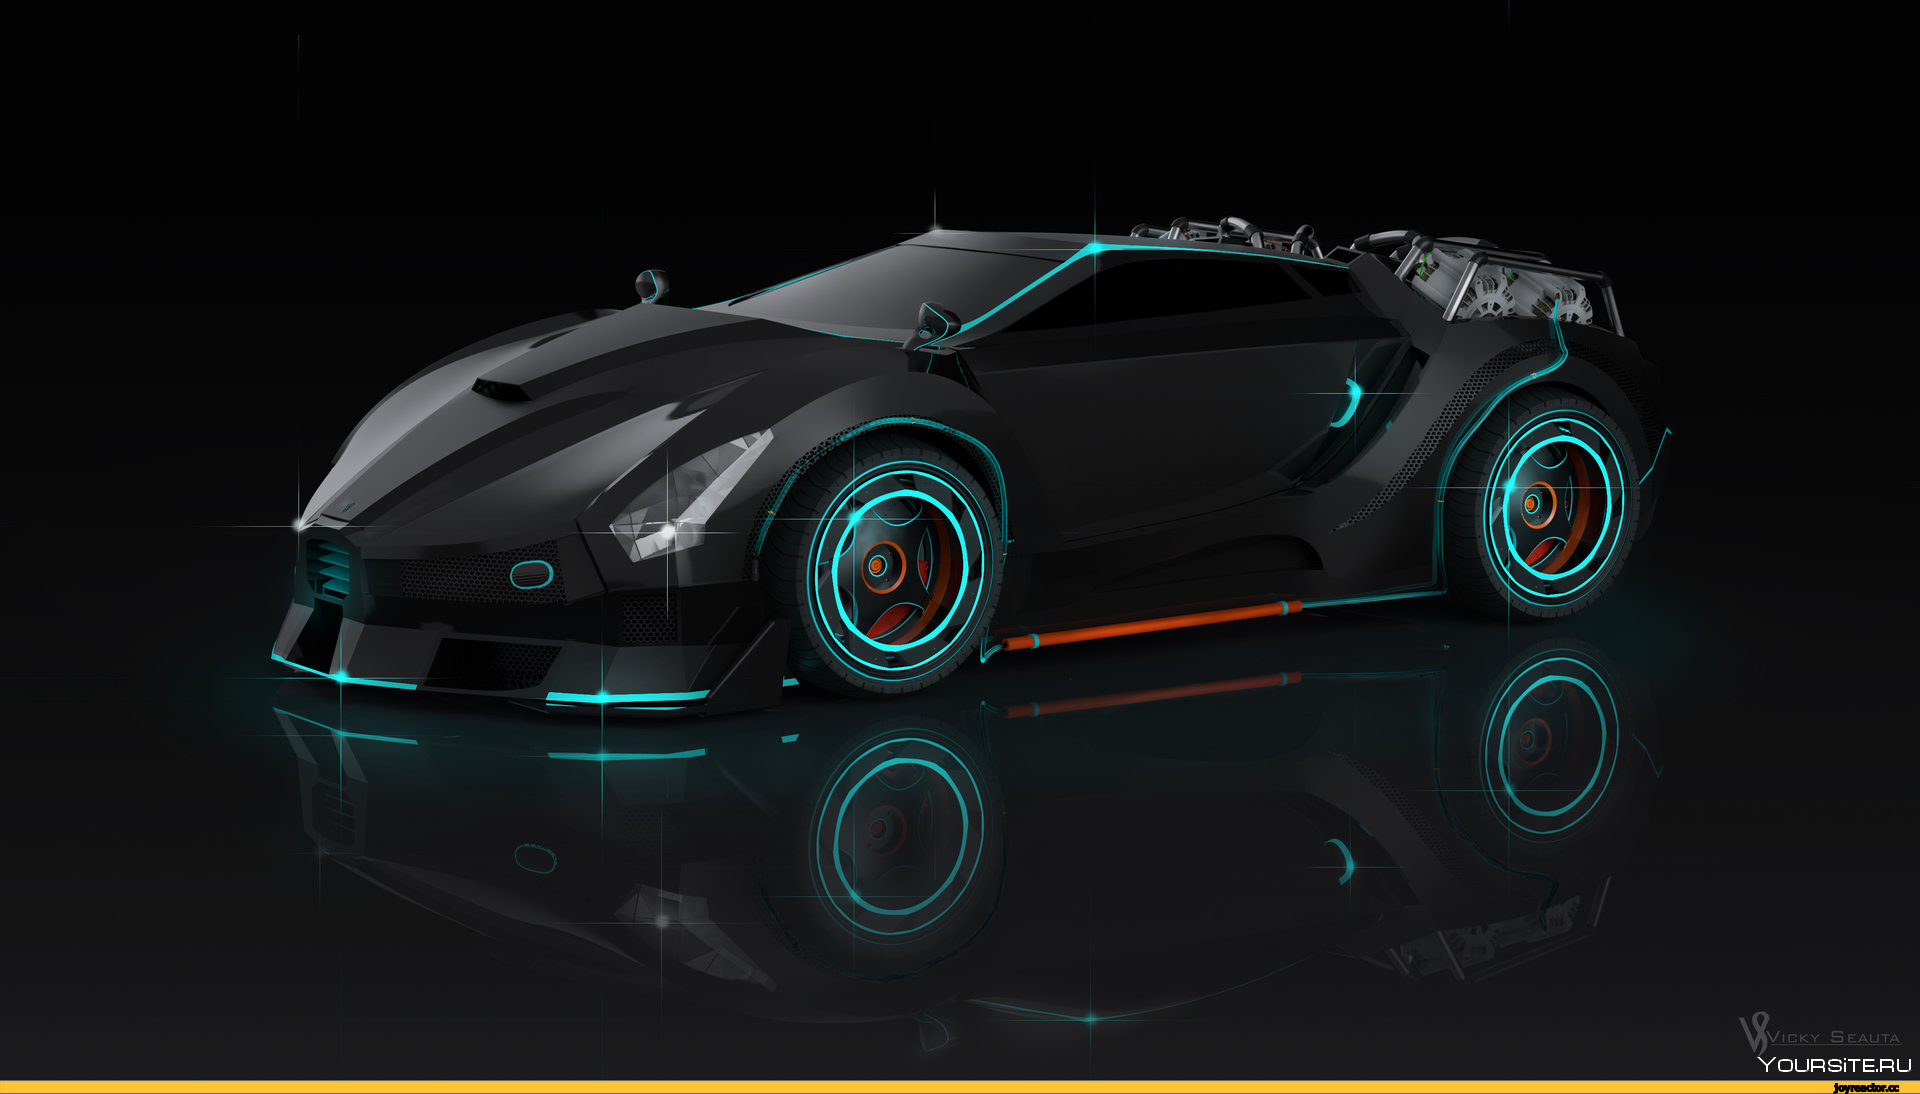 Cyberpunk 2077 Lamborghini. Ламборгини киберпанк 2077. Делориан киберпанк 2077 DMC. Концепт Cyberpunk car.